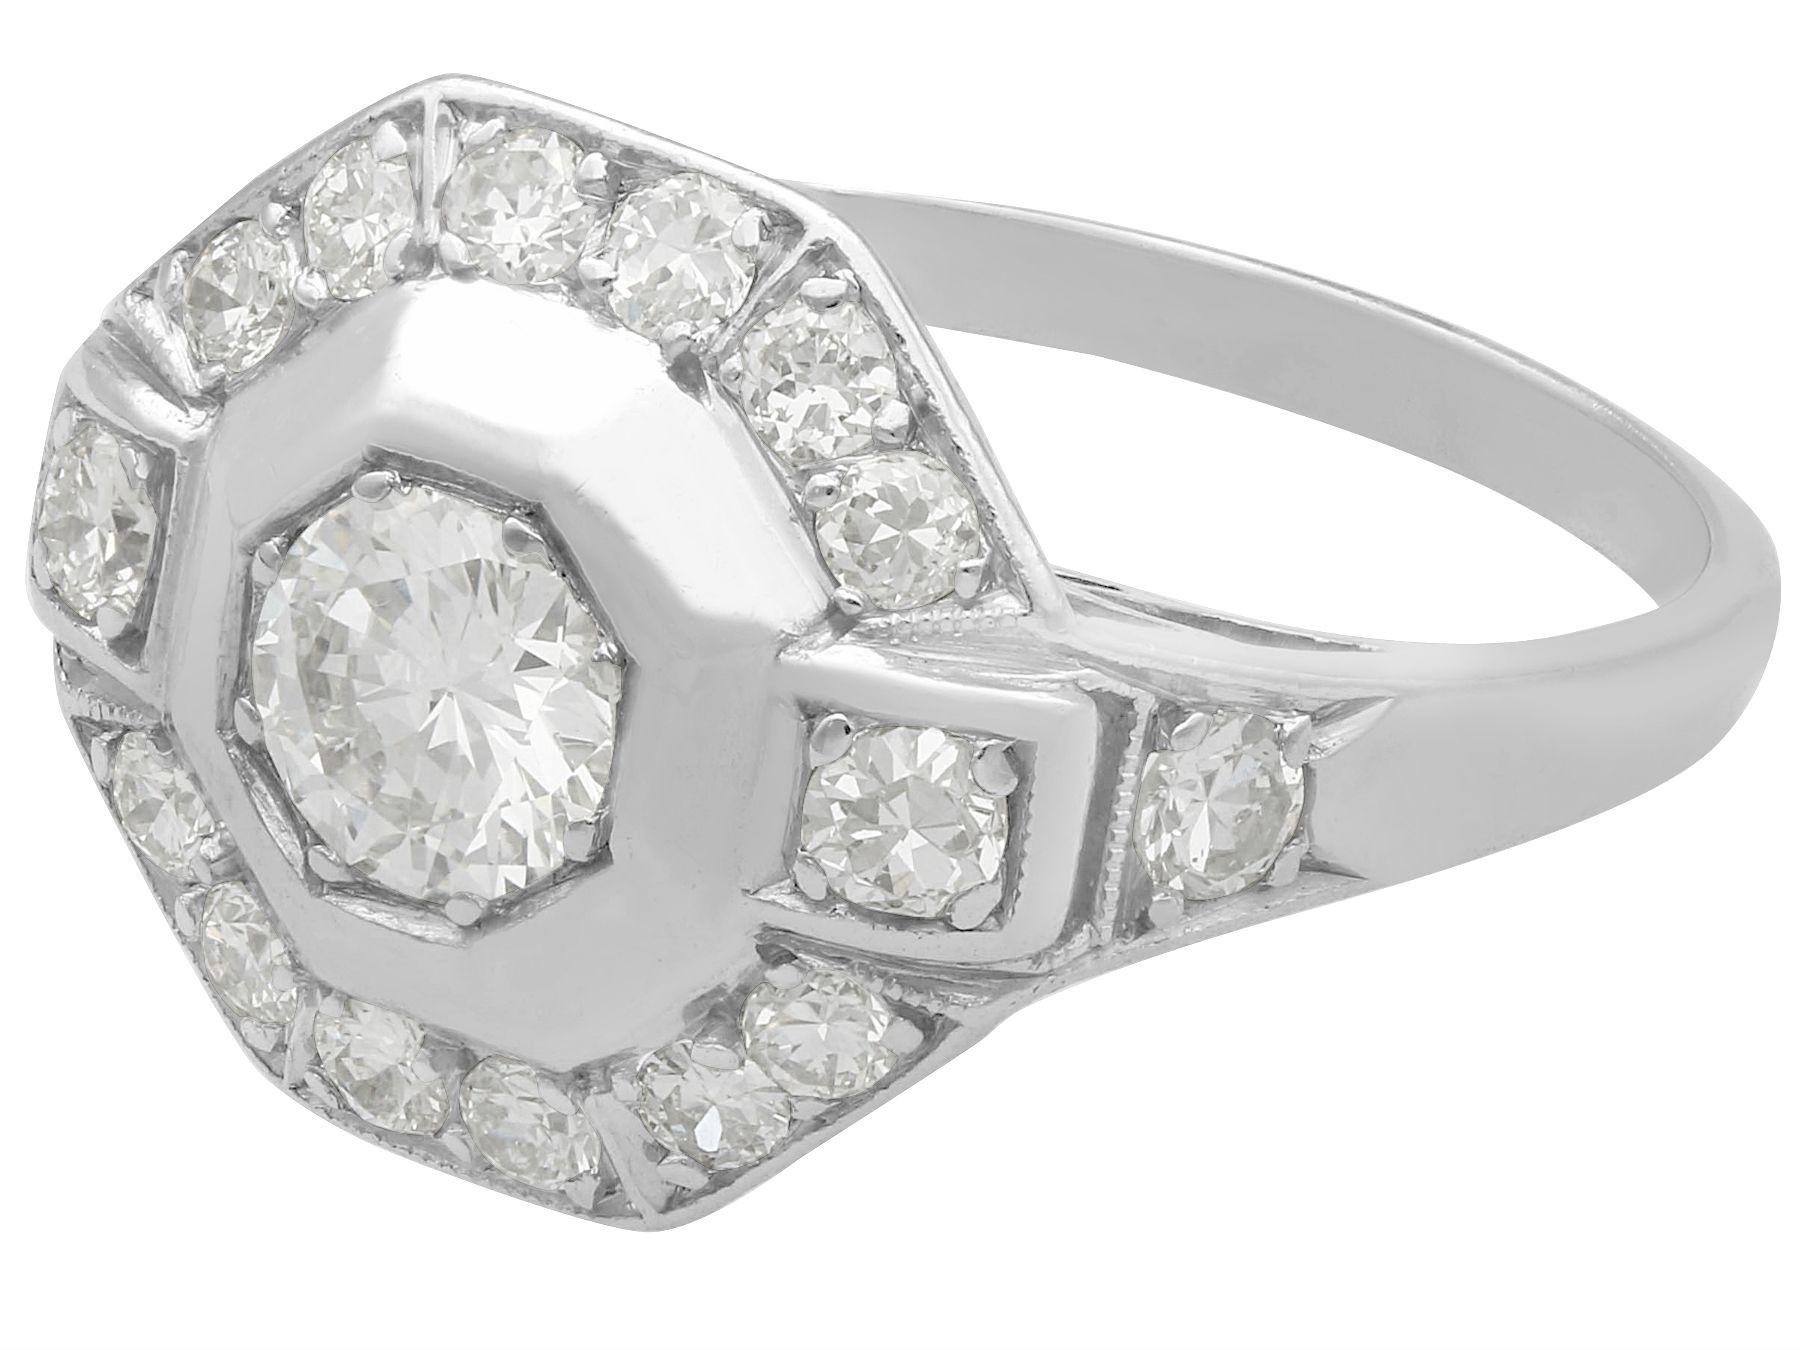 Art Deco Vintage 1940s Diamond and Platinum Cocktail Ring